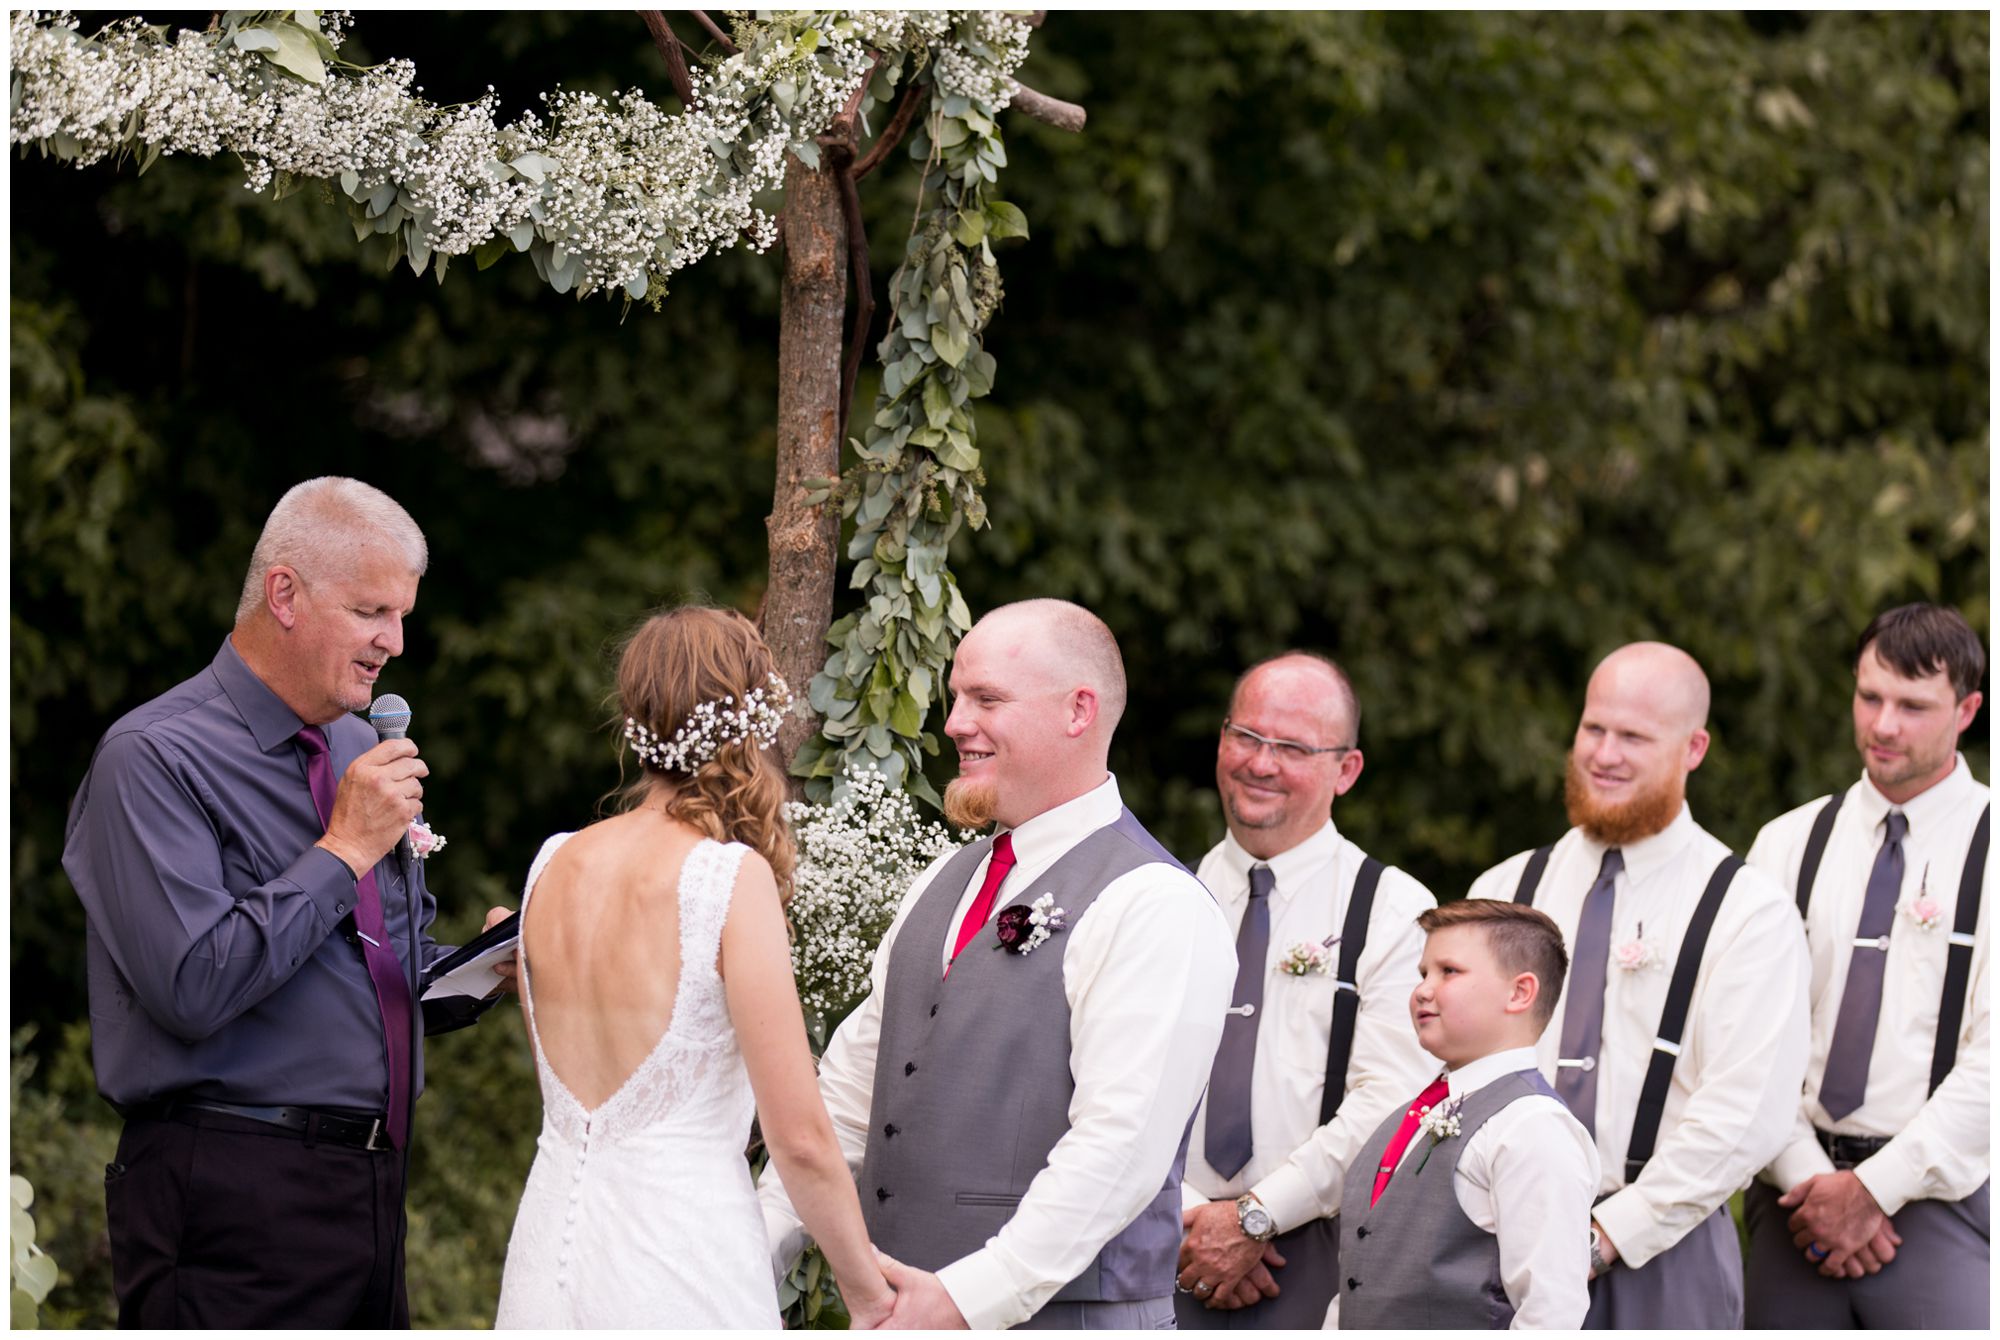 groom Daniel looks at bride Tabea during wedding ceremony with groomsmen looking on behind Daniel